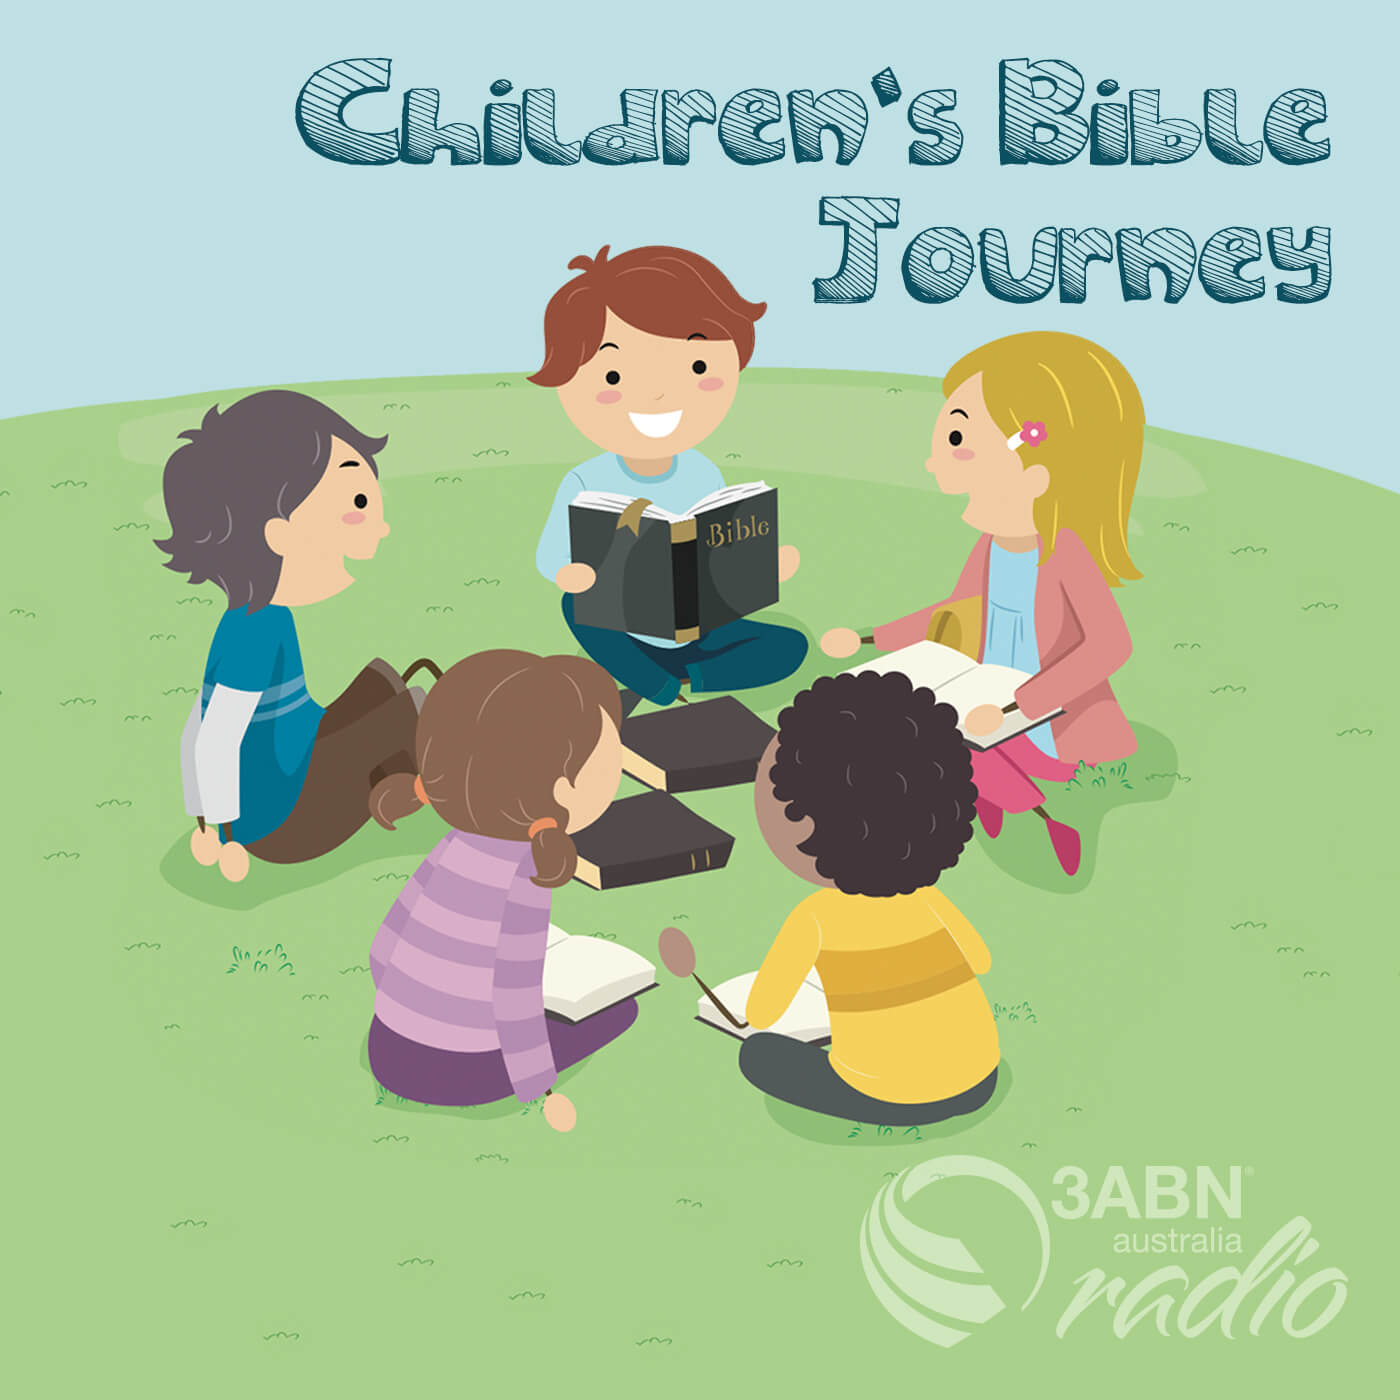 Children's Bible Journey - 2182